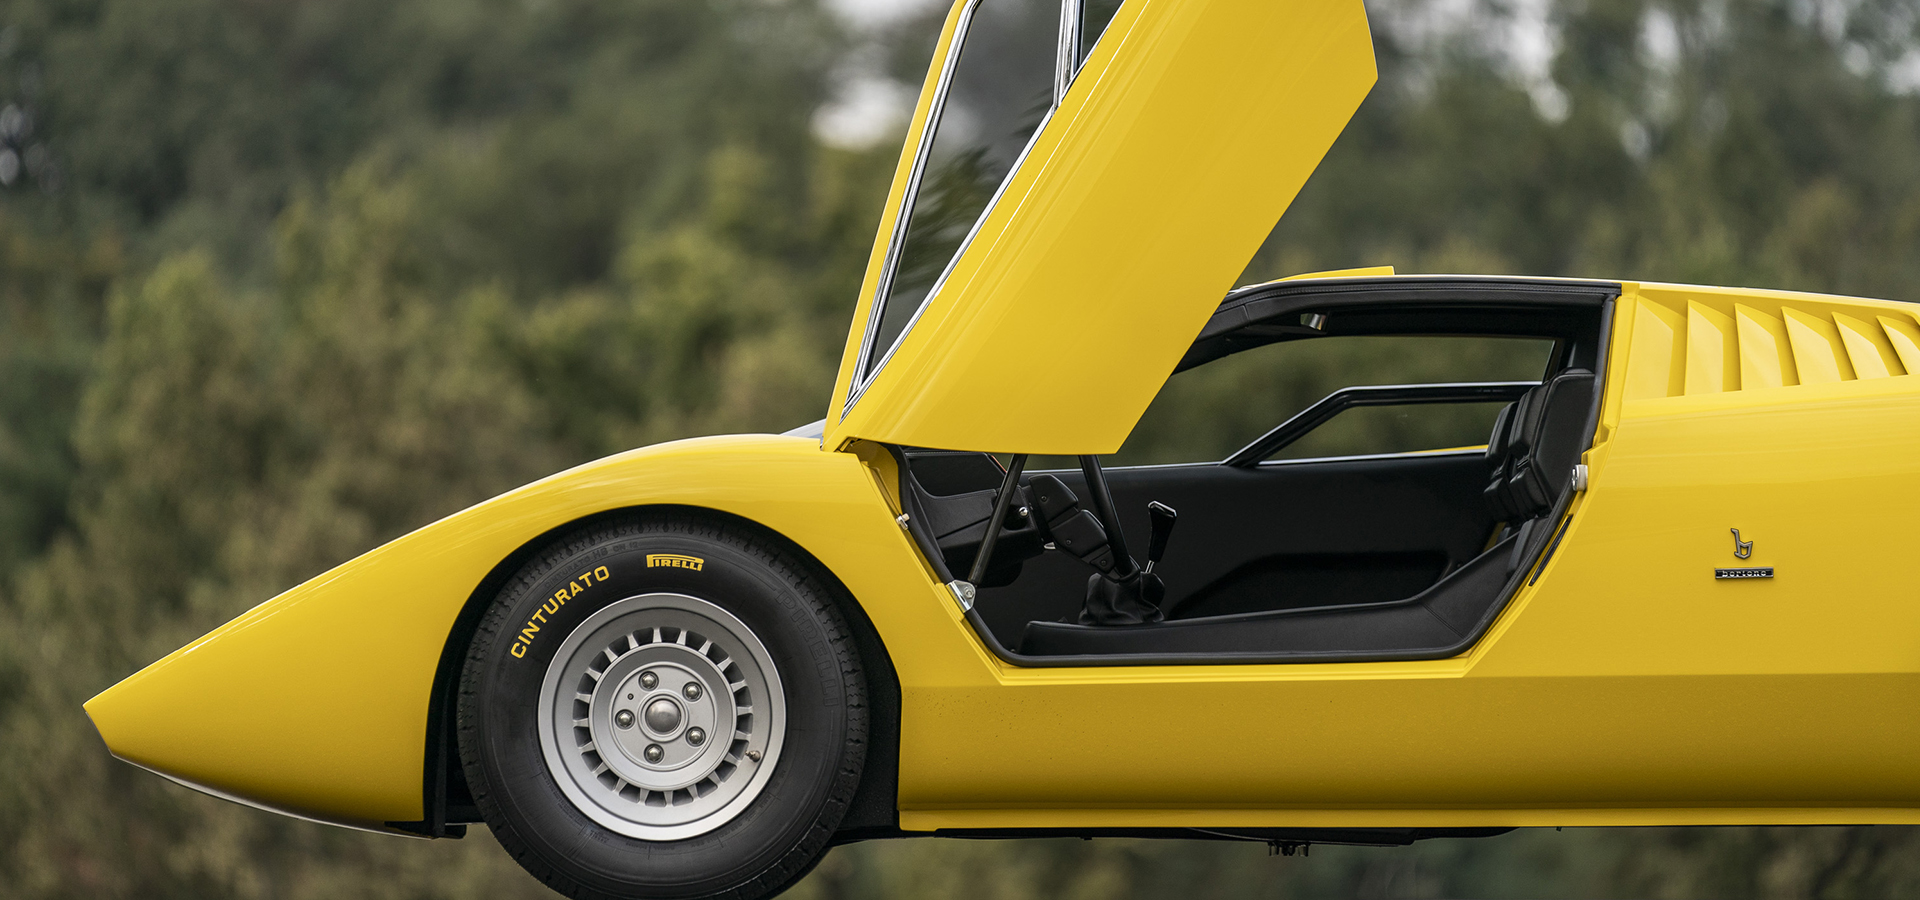 Lamborghini Countach LP 500: The Shakedown